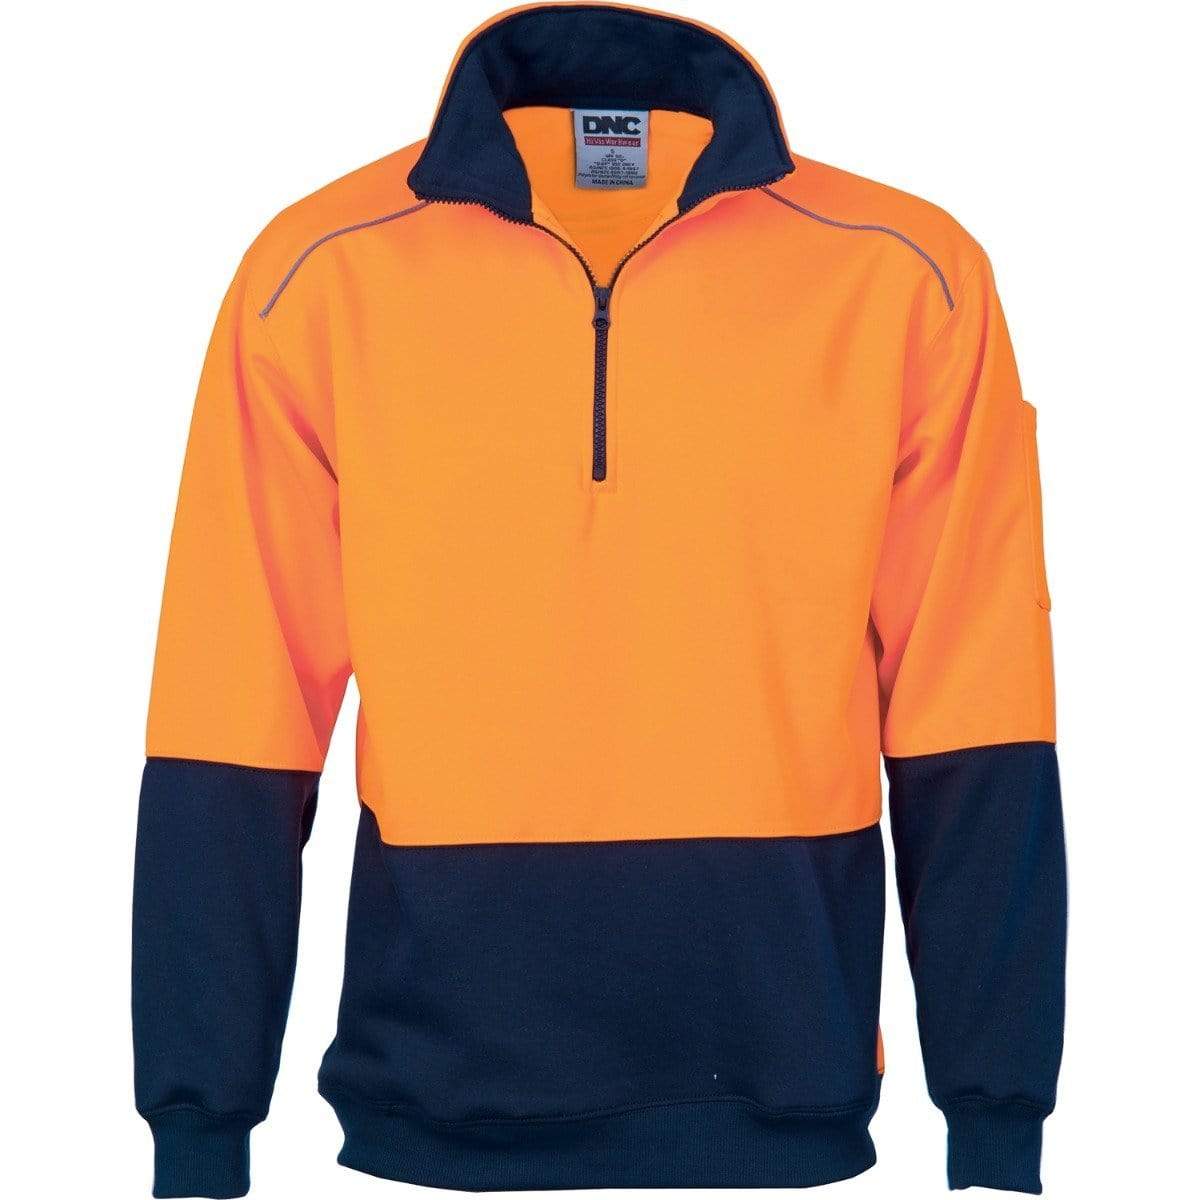 Dnc Workwear Hi-vis Two-tone 1/2 Zip Reflective Piping Sweatshirt - 3928 Work Wear DNC Workwear Orange/Navy XS 